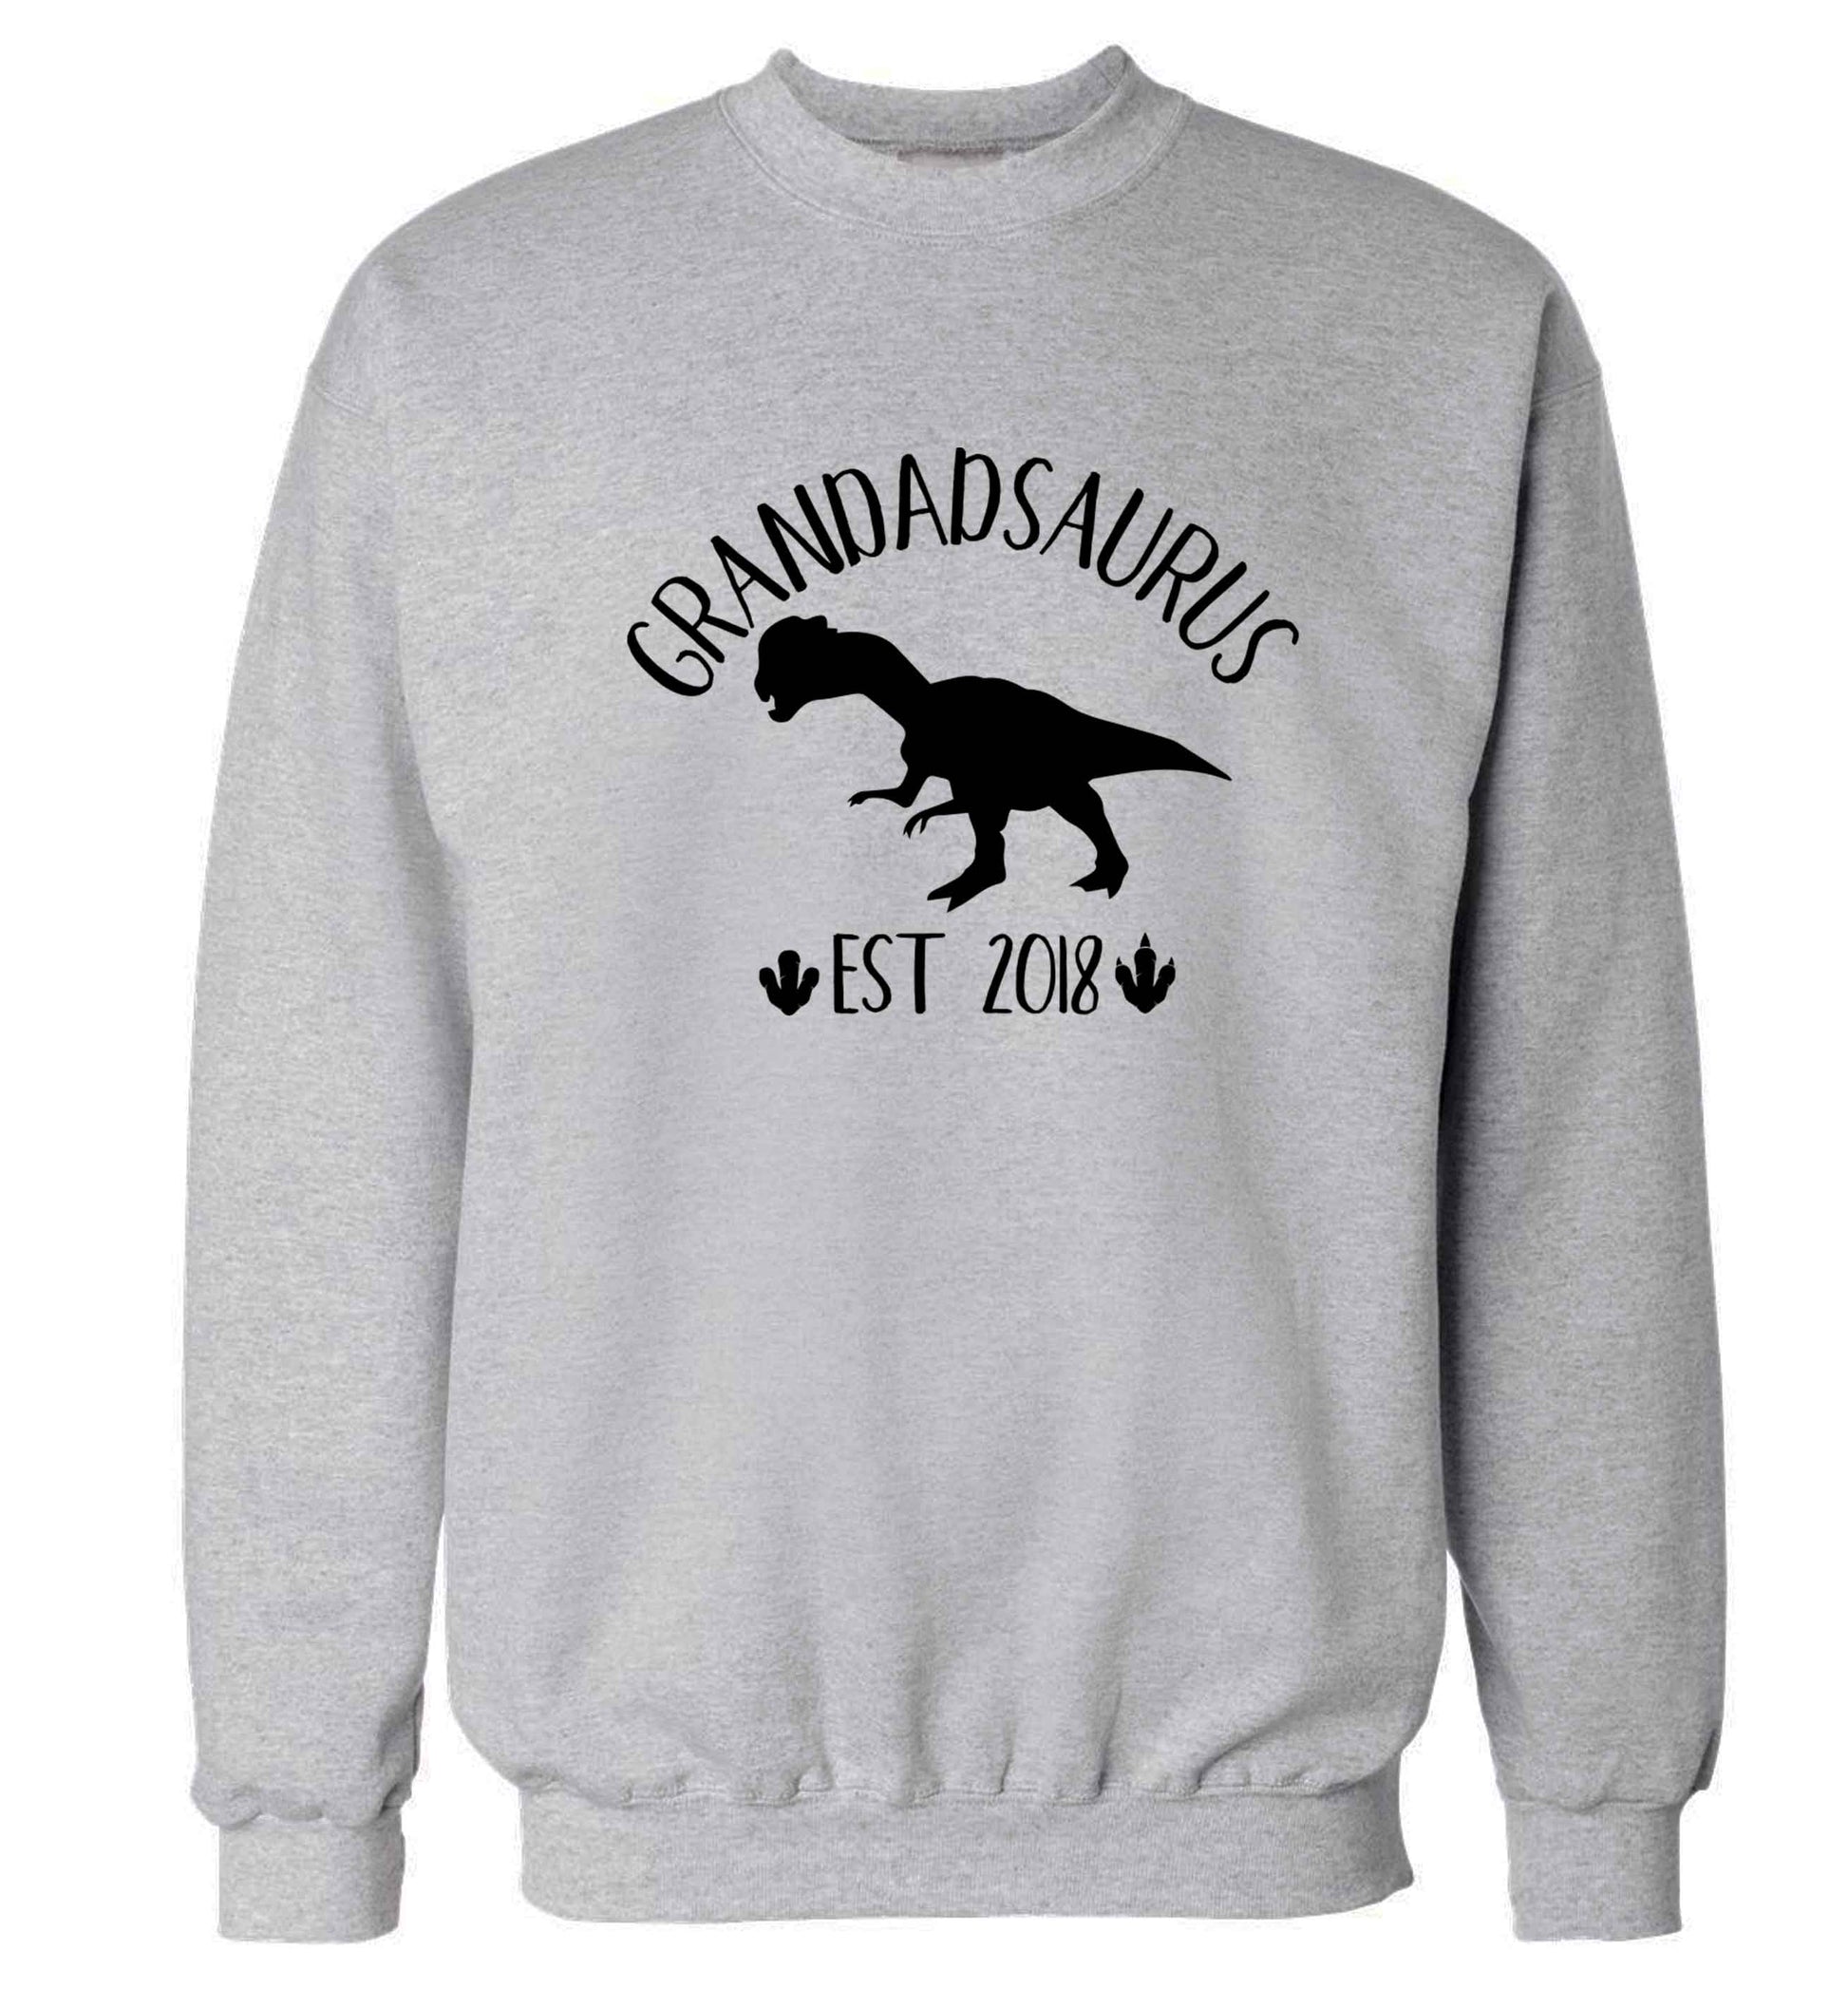 Personalised grandadsaurus since (custom date) Adult's unisex grey Sweater 2XL